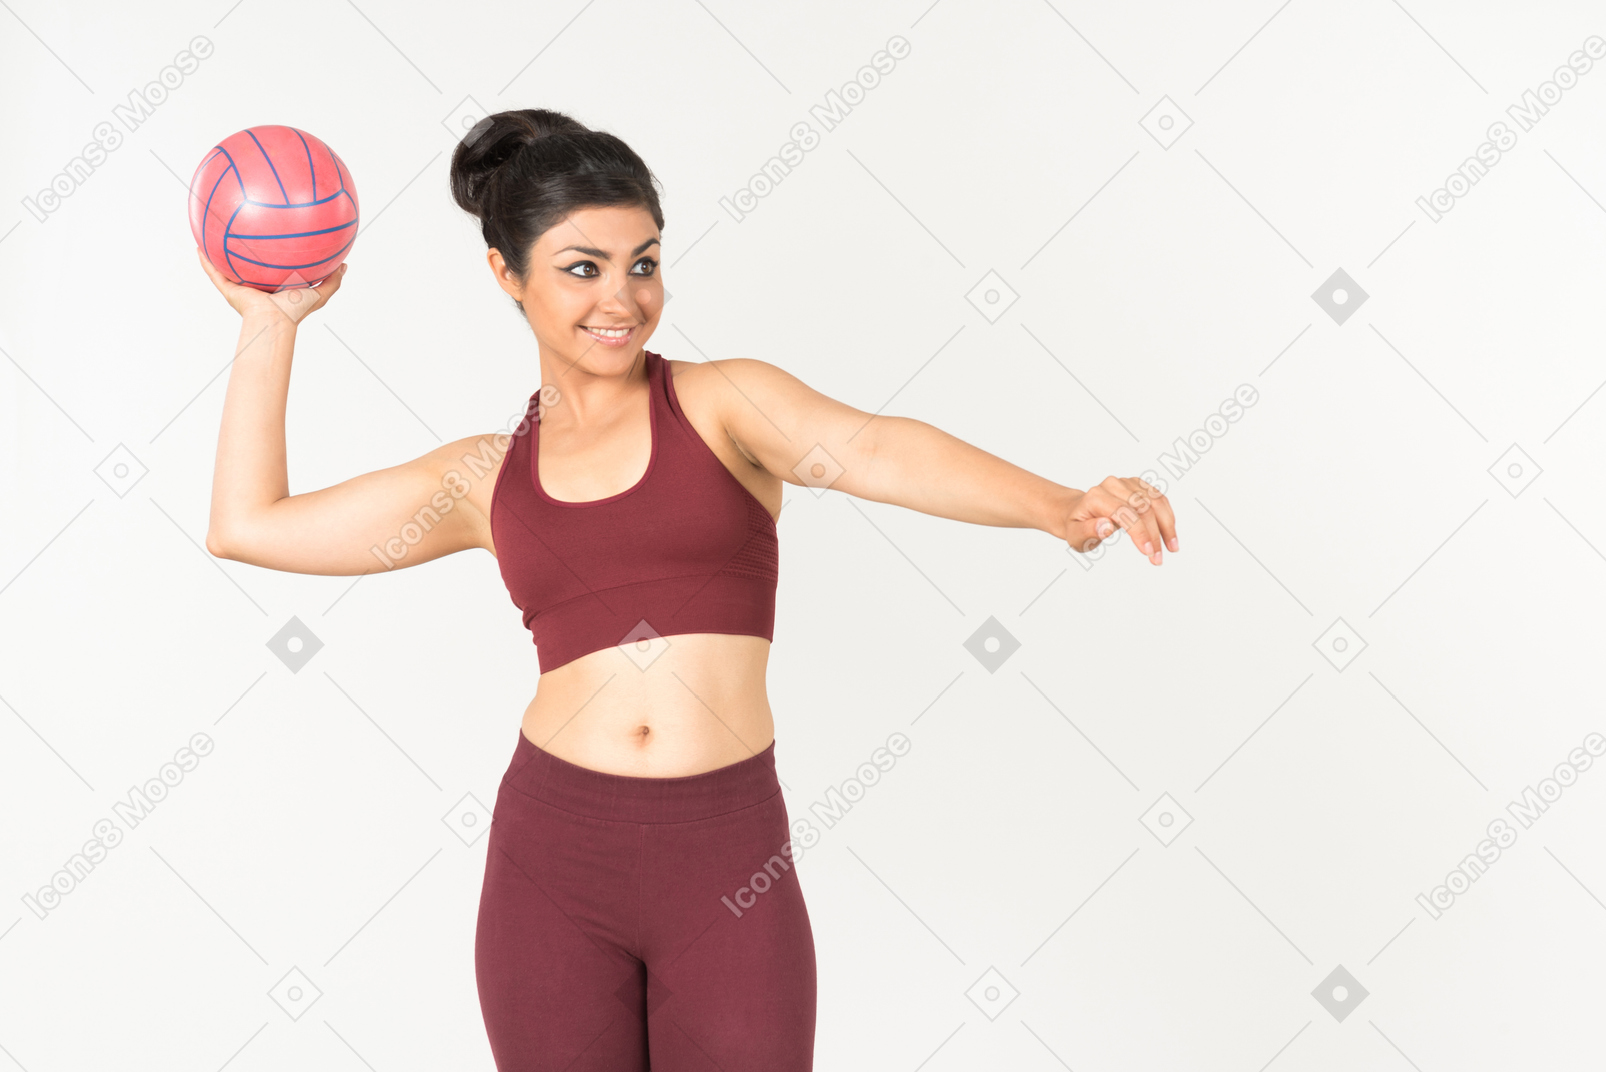 Jovem indiana no sportswear vai jogar uma bola